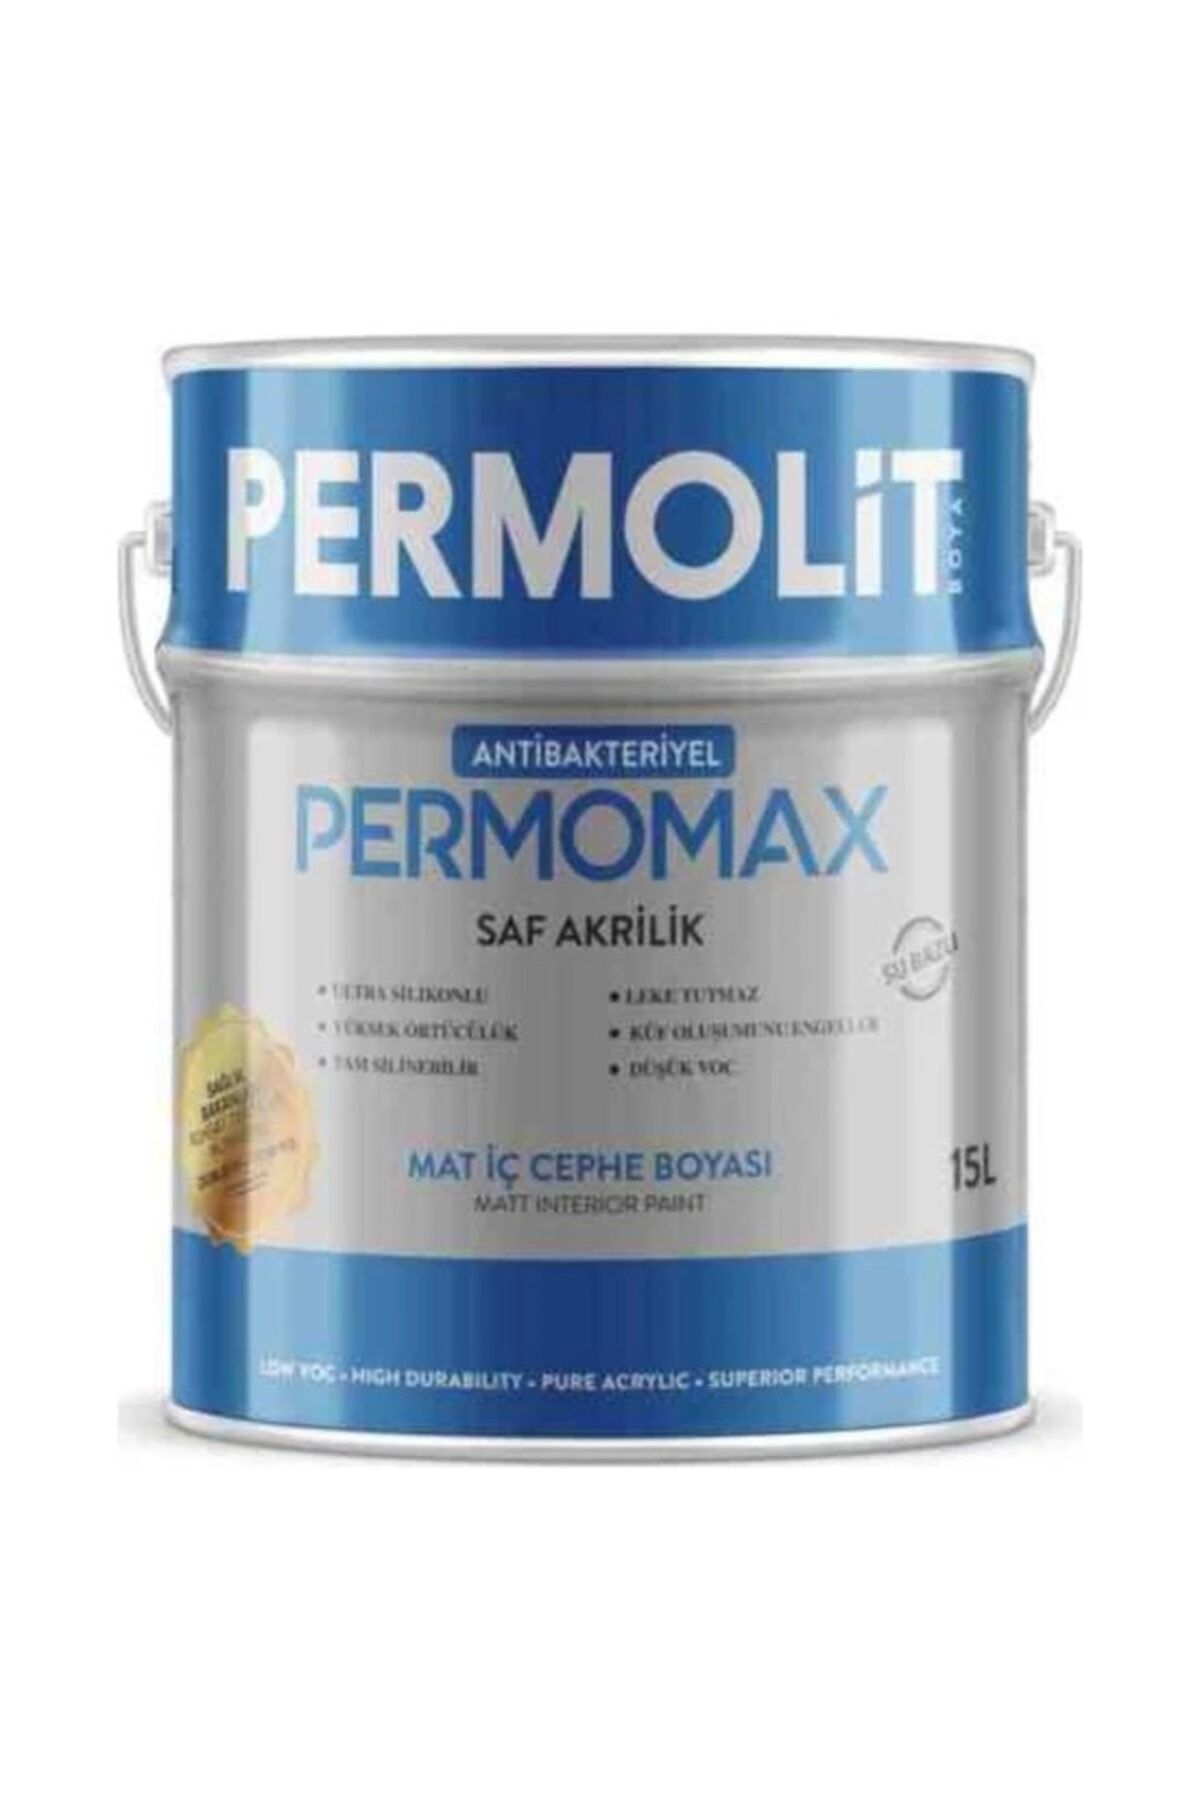 Permolit Permomax Antibakteriyel Mat İç Cephe Boyası 2,5 lt